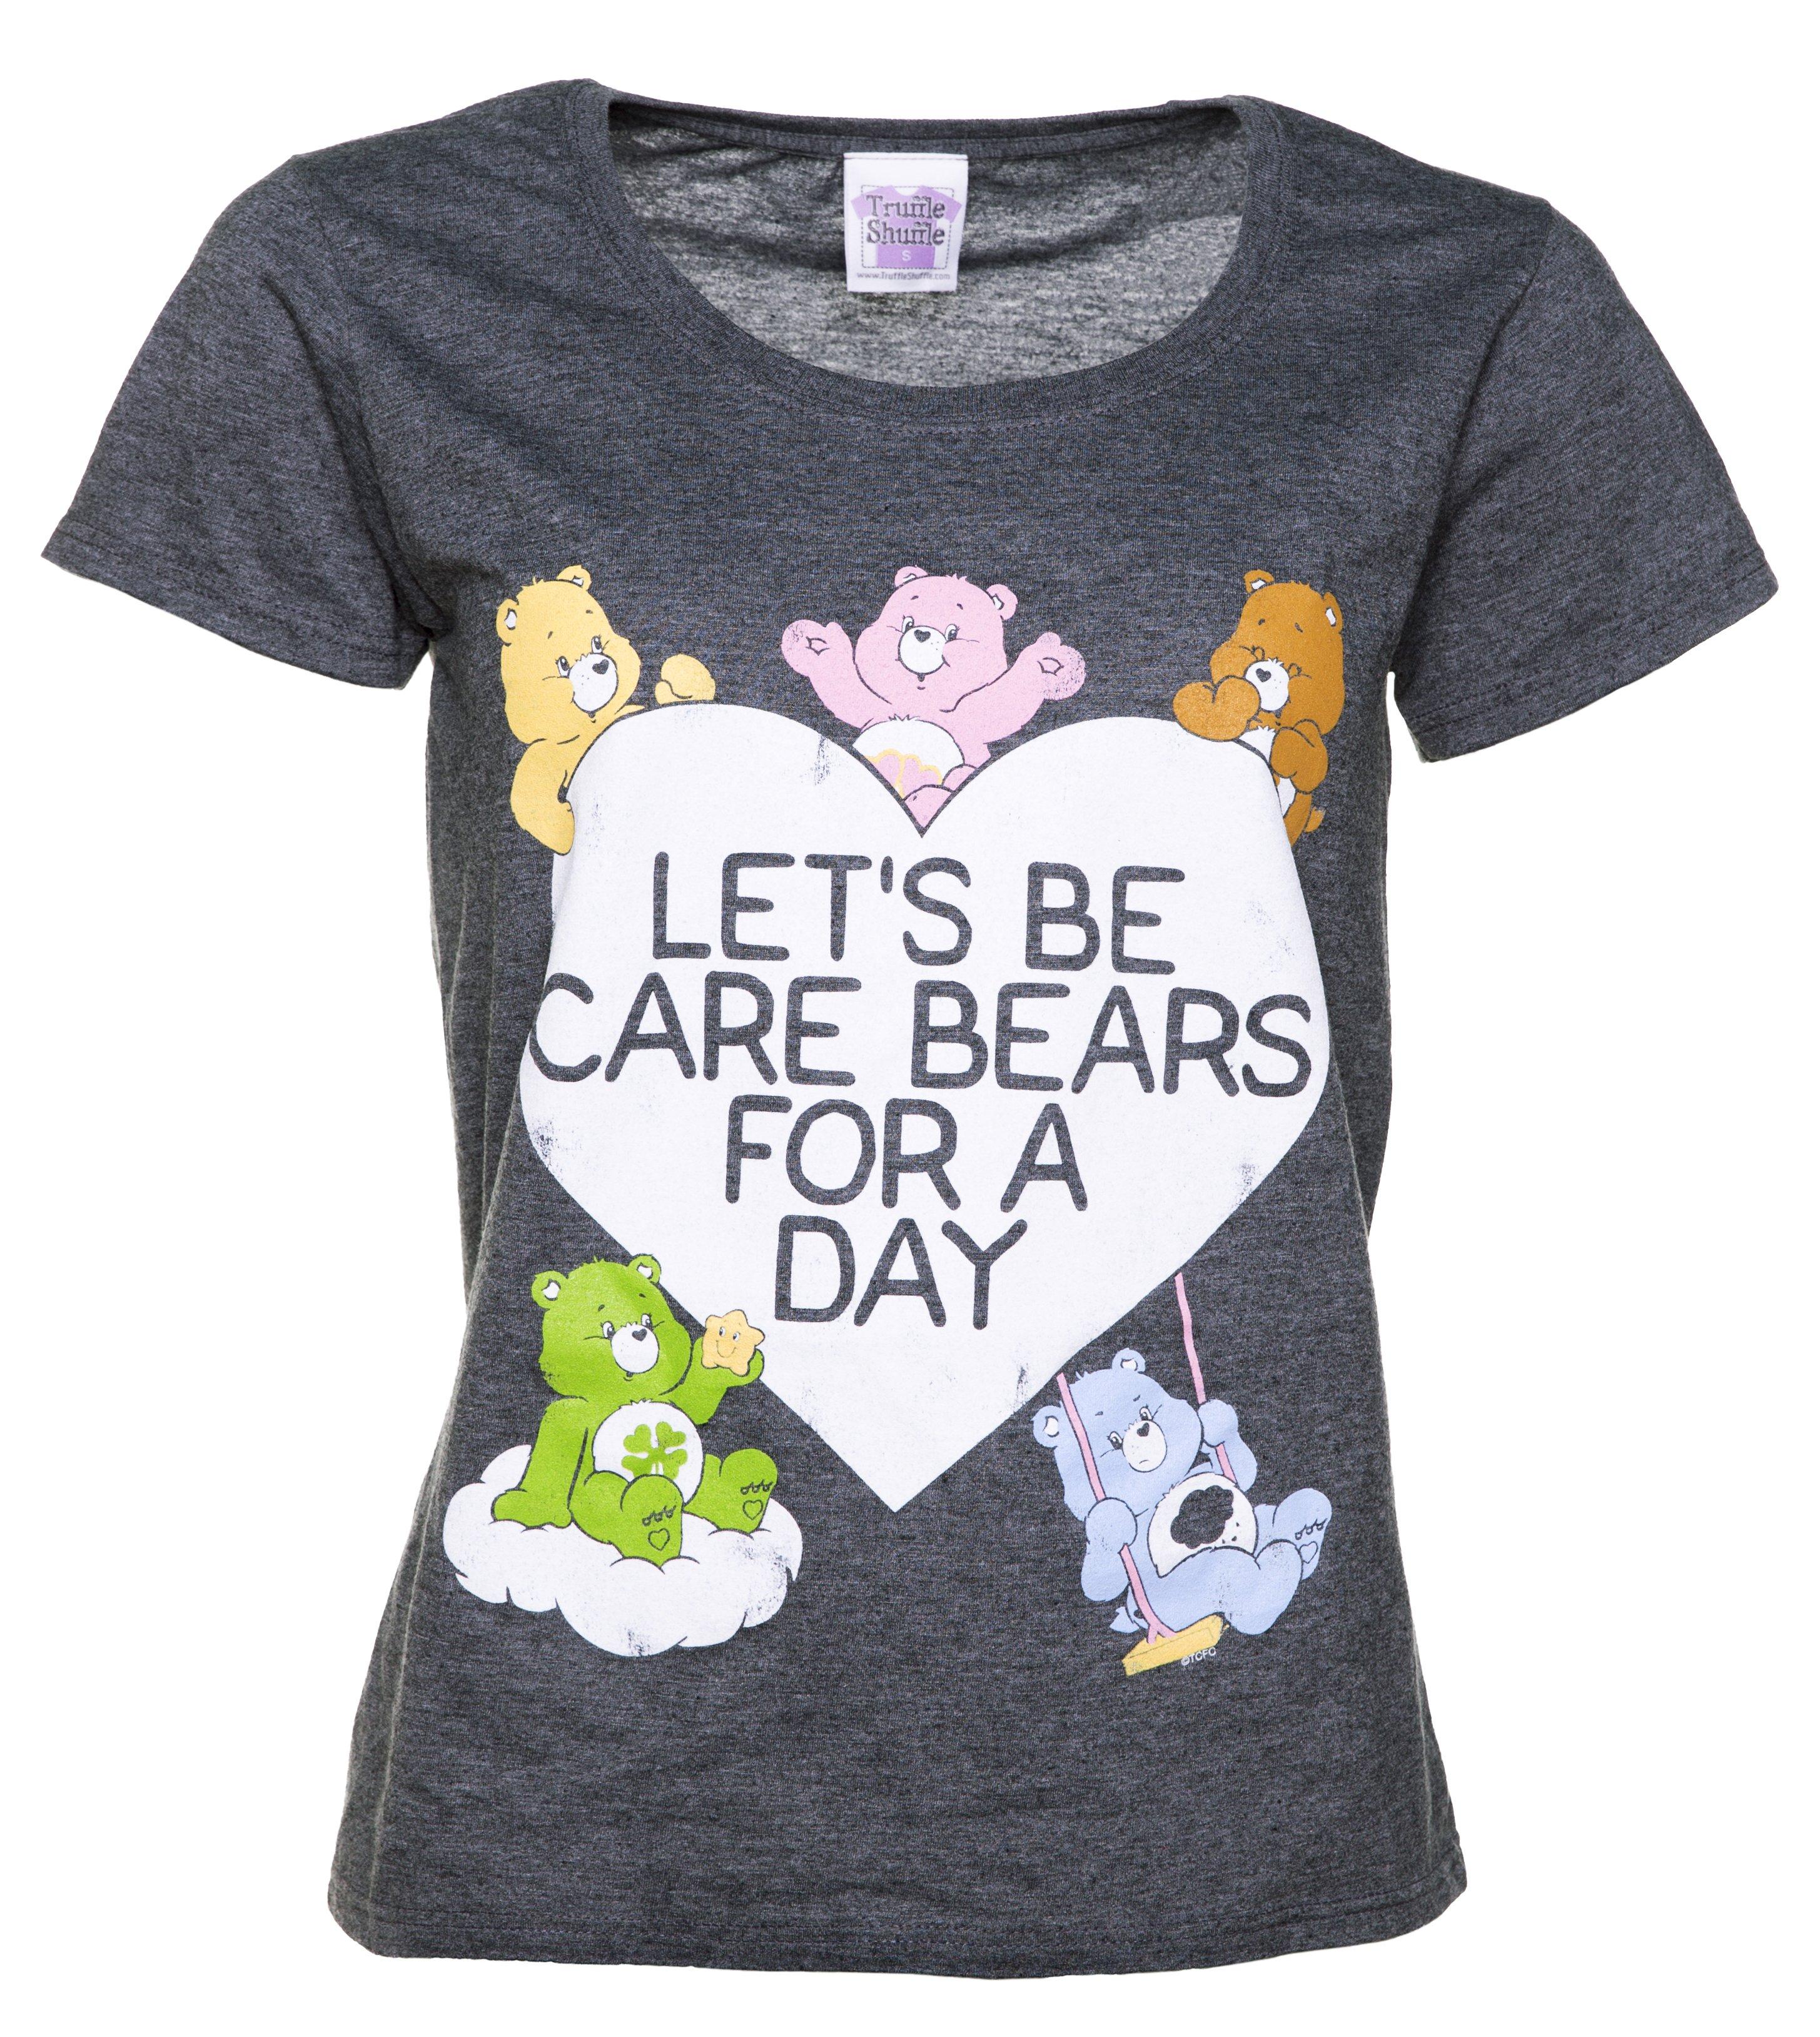 Adult care bear shirts